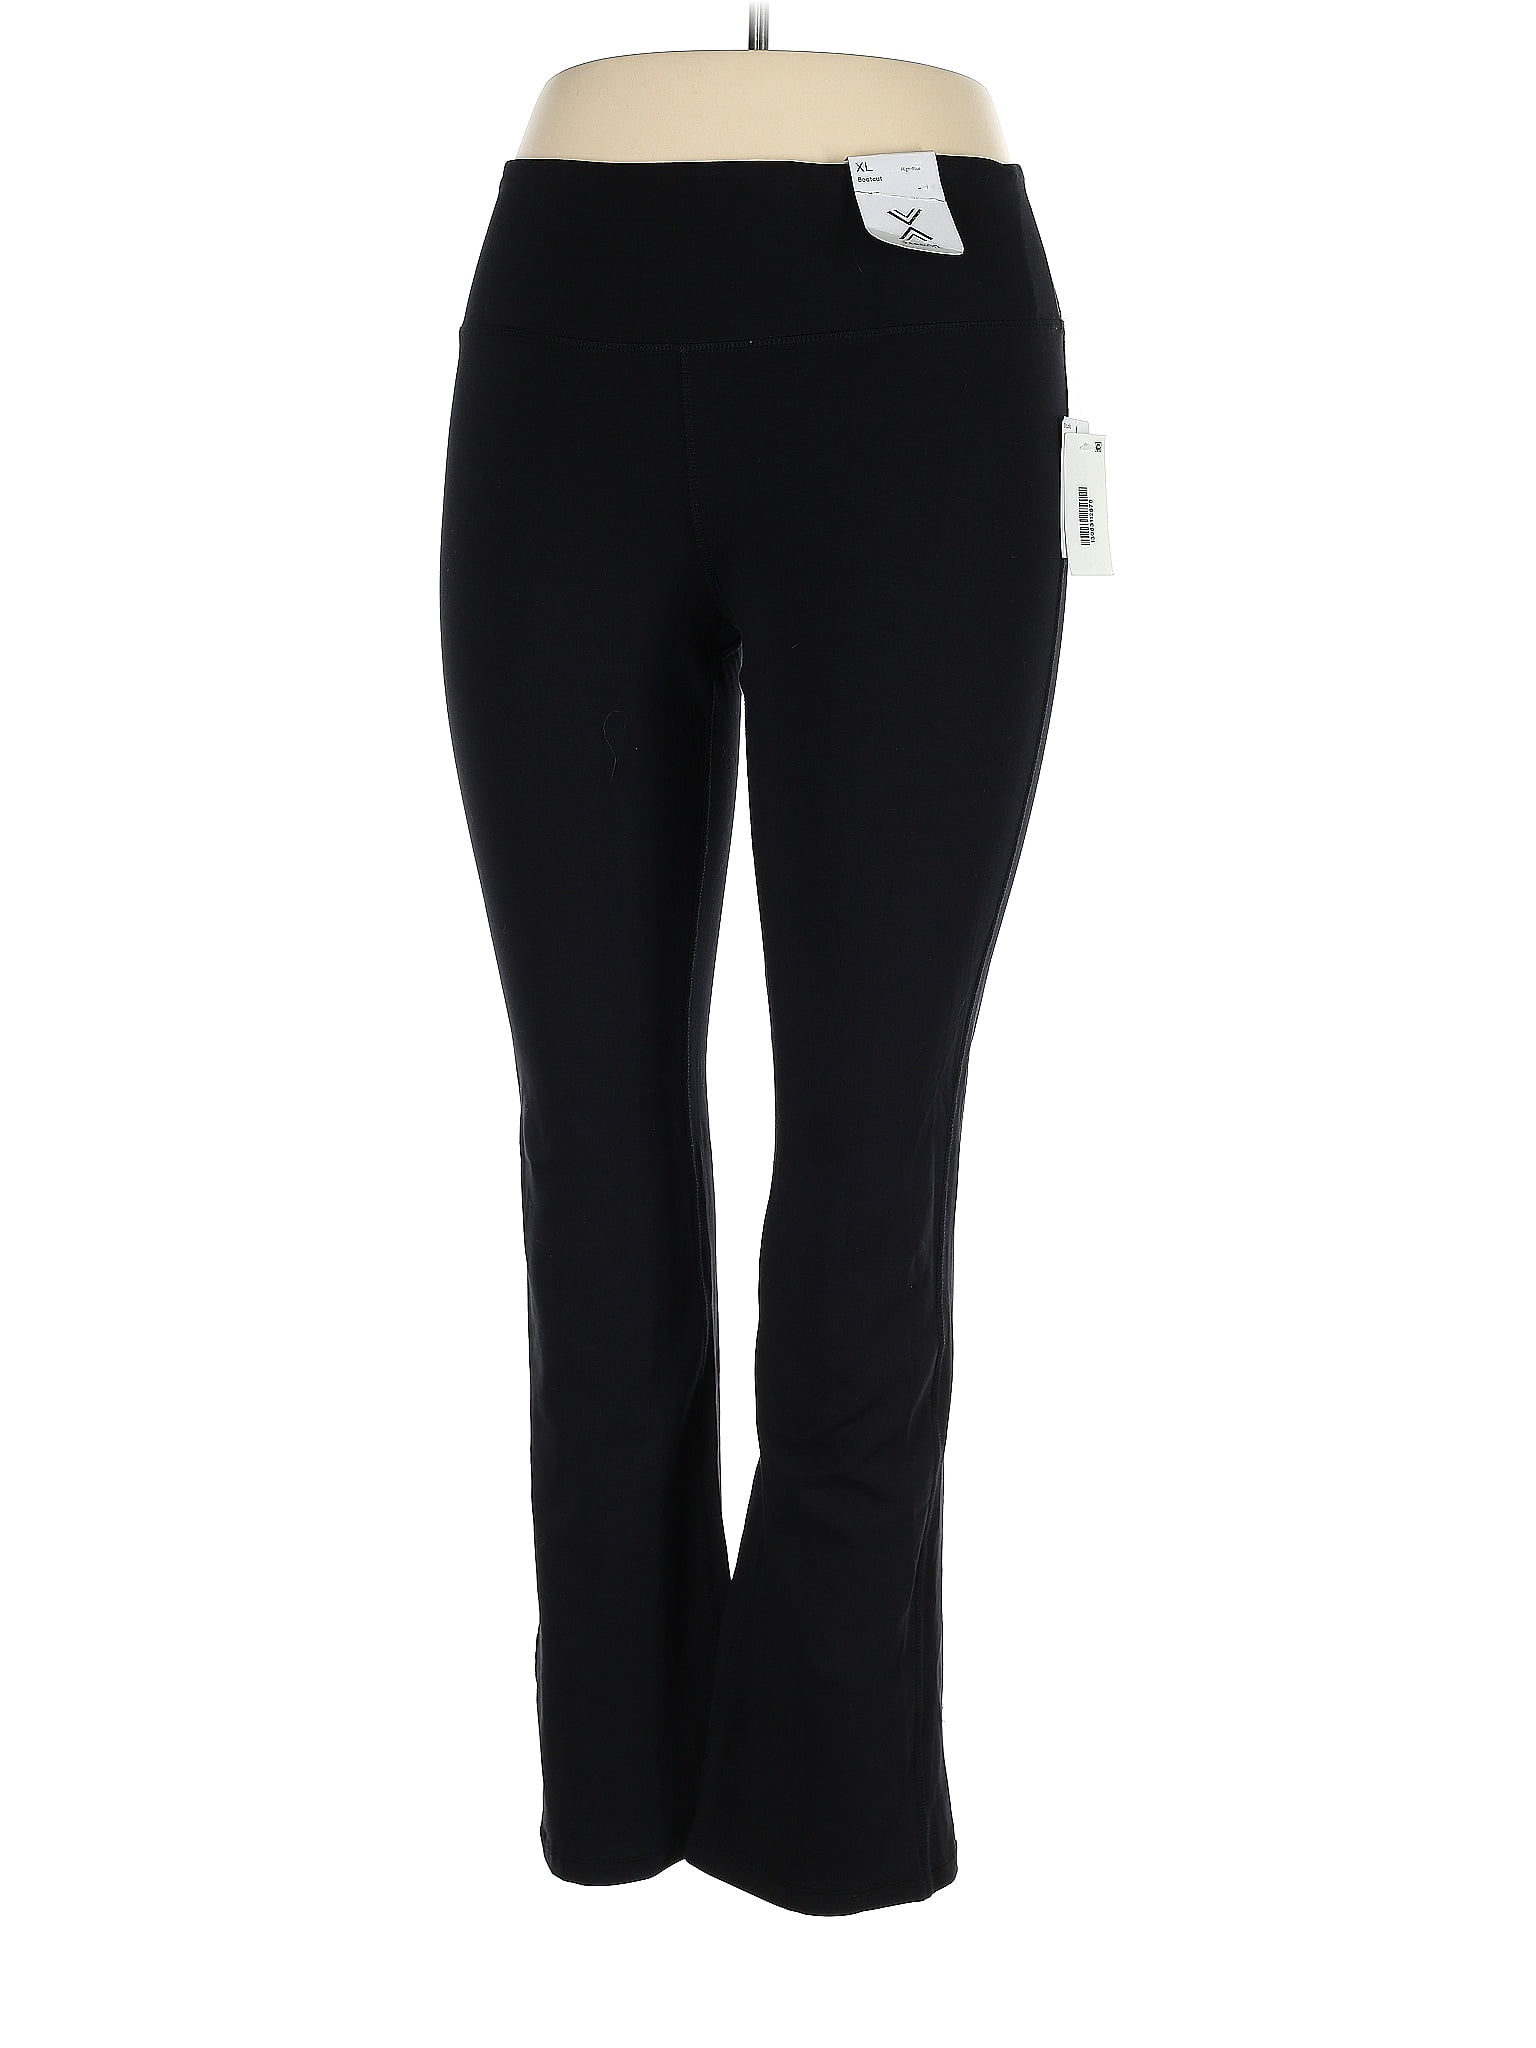 Xersion Black Active Pants Size XL - 48% off